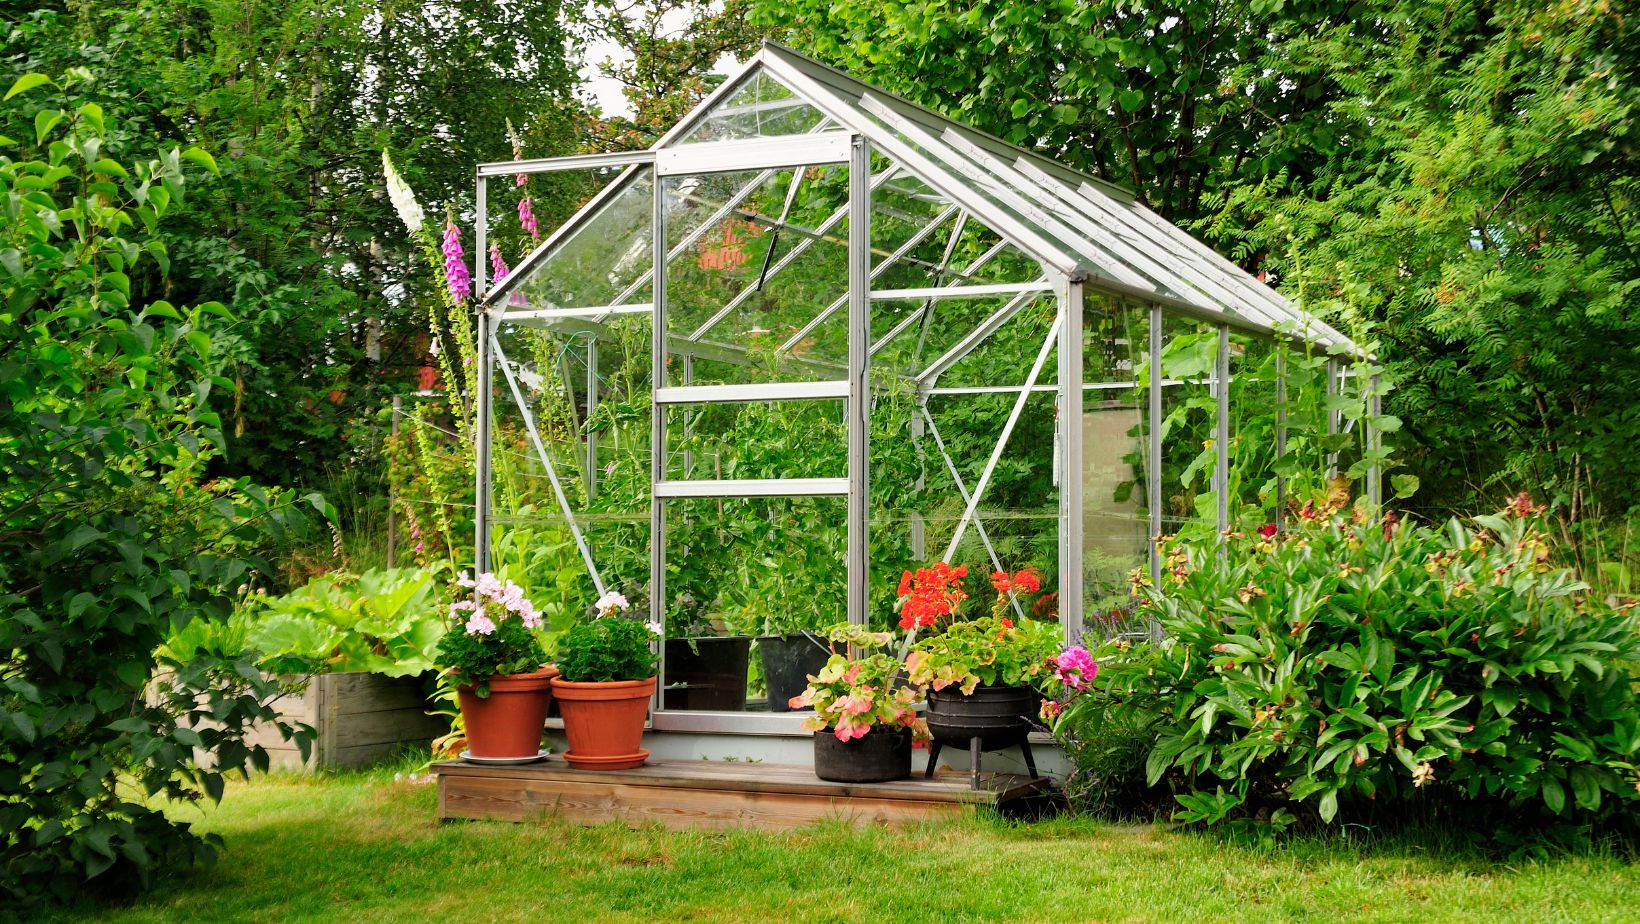 Adding a greenhouse